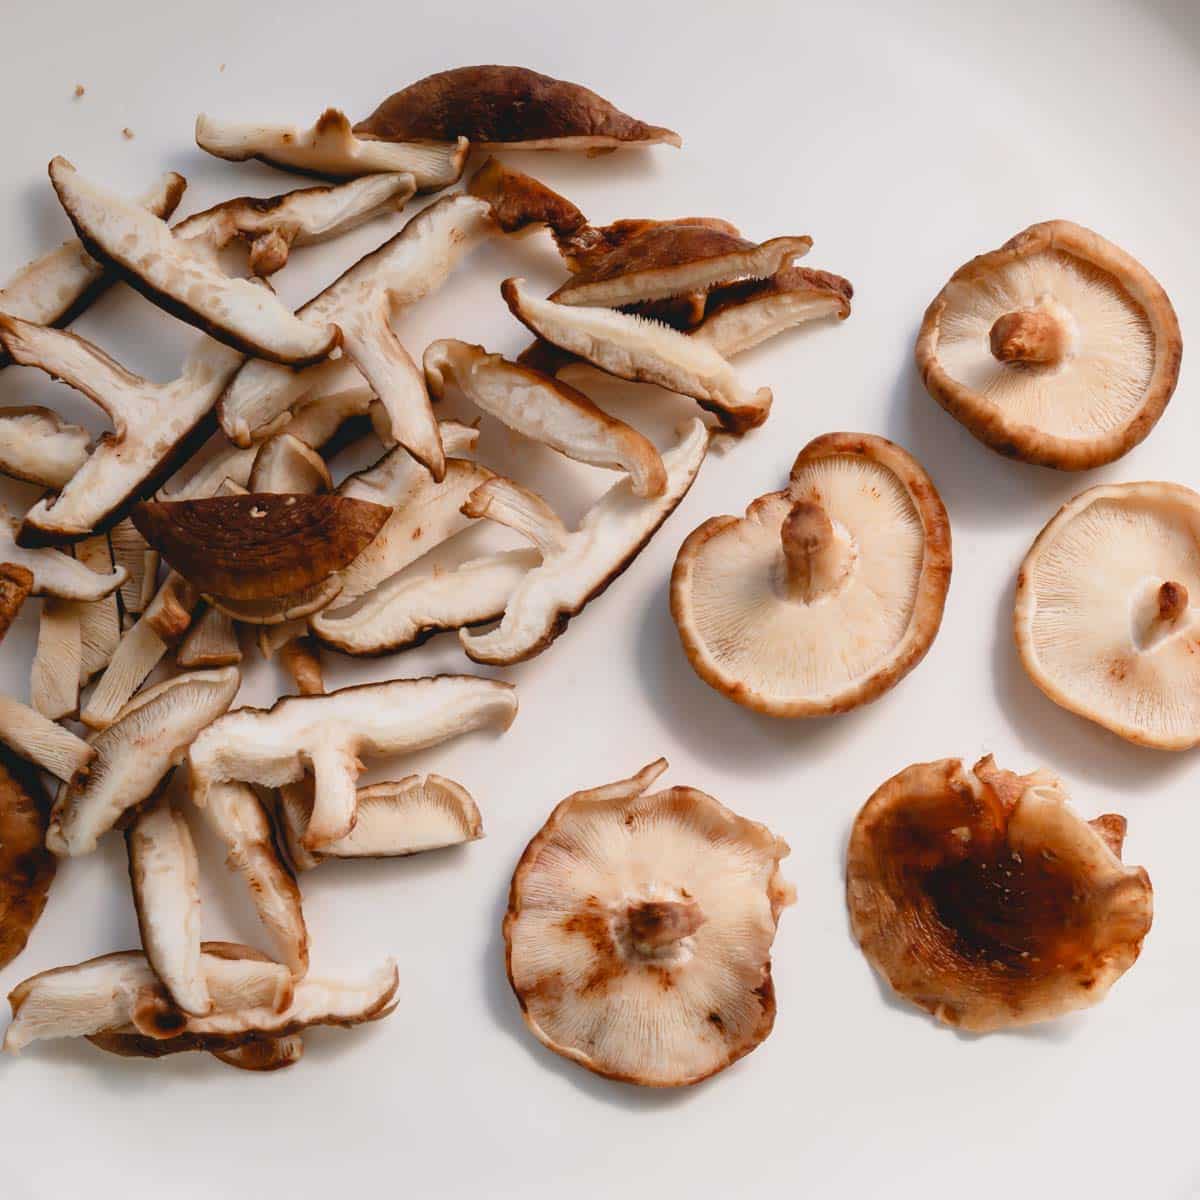 Shiitake mushrooms and white mushrooms on a cutting board.